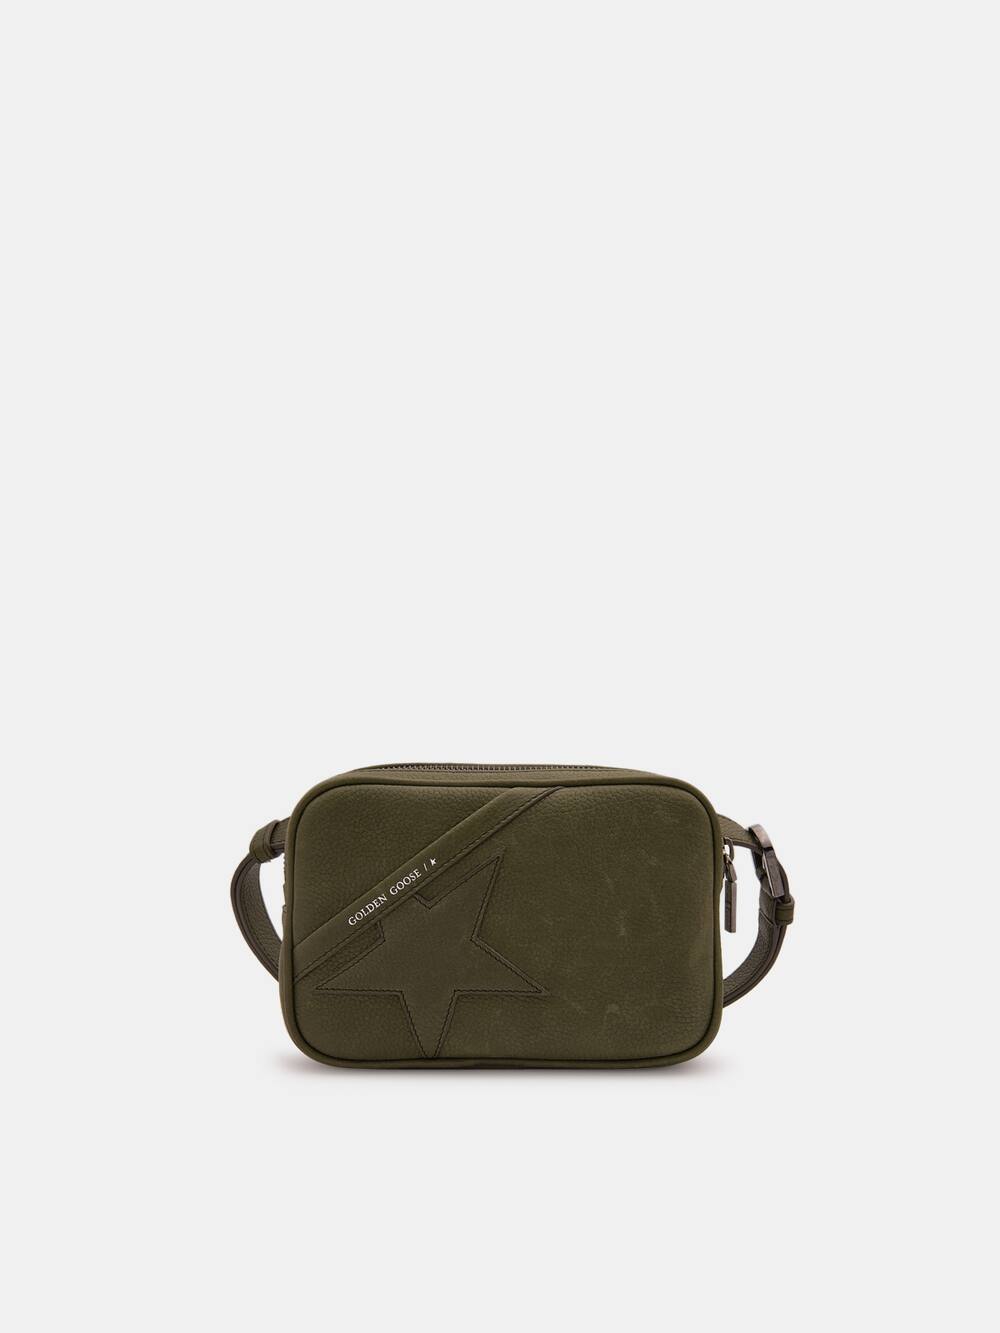 Golden Goose - Tasche Star Belt Bag aus gewalktem Leder in Armeegrün in 